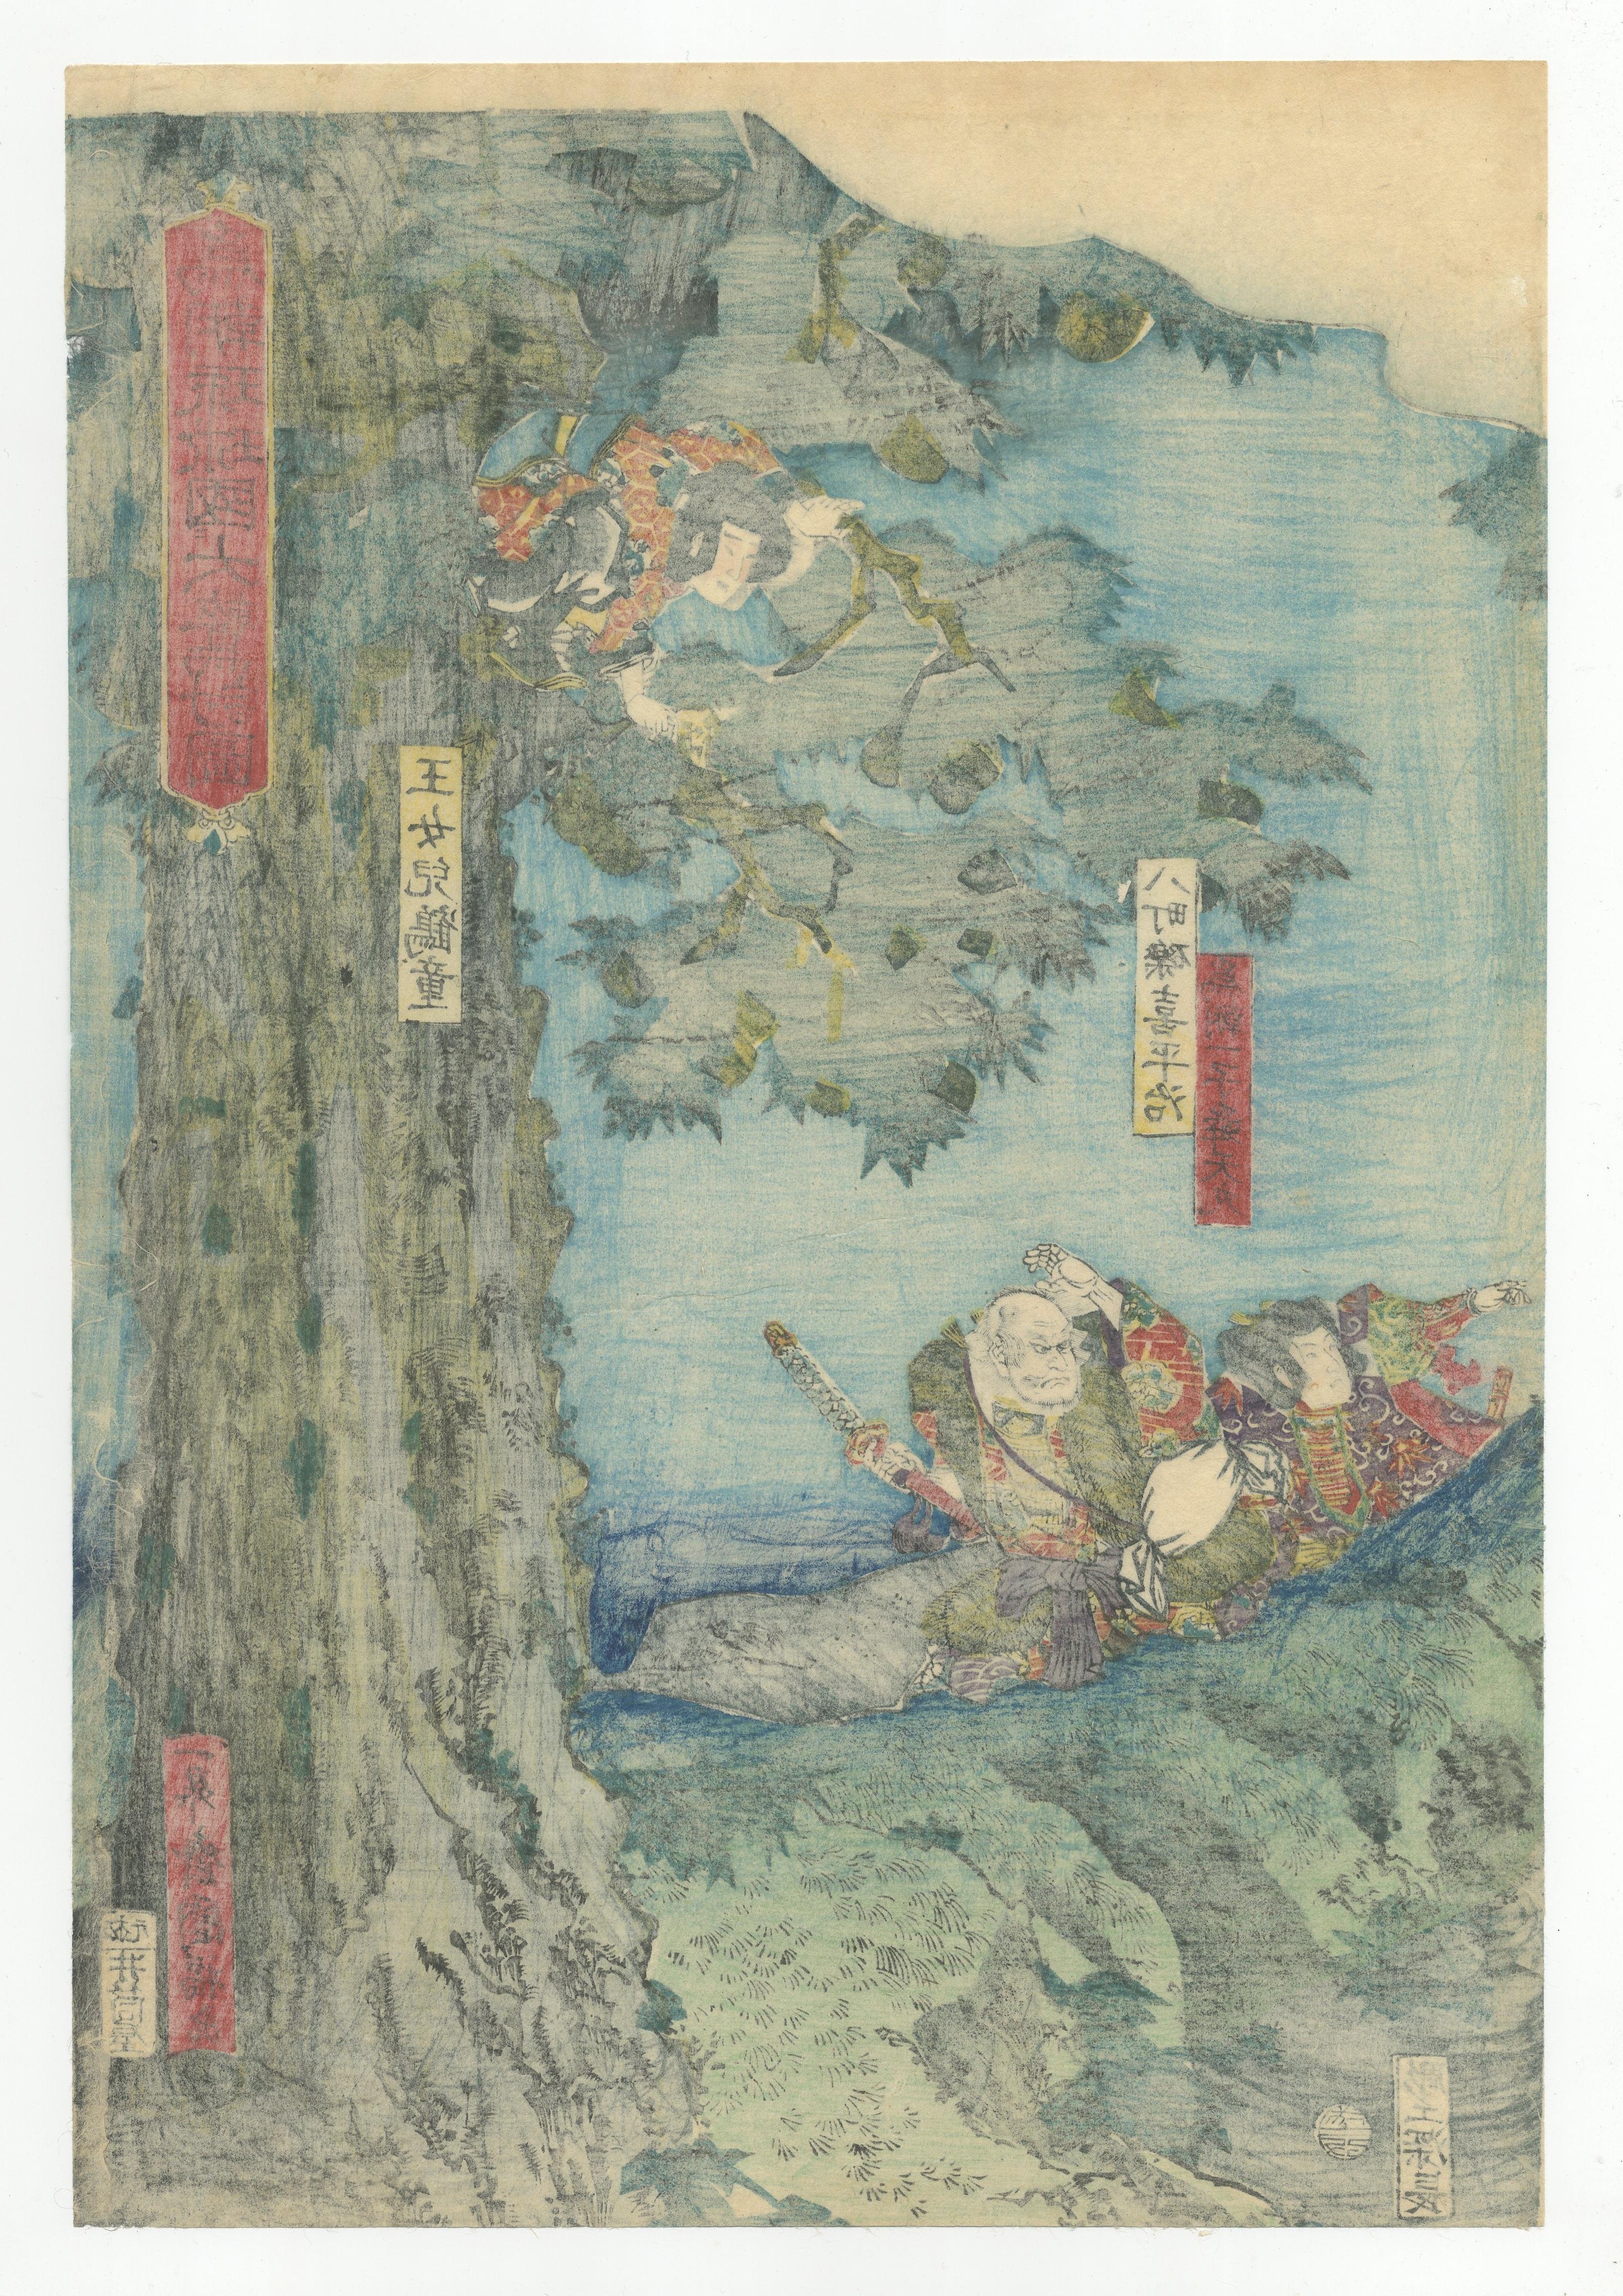 Paper Original Japanese Woodblock Print, Floating World Art, Samurai, Utagawa Kunifuku